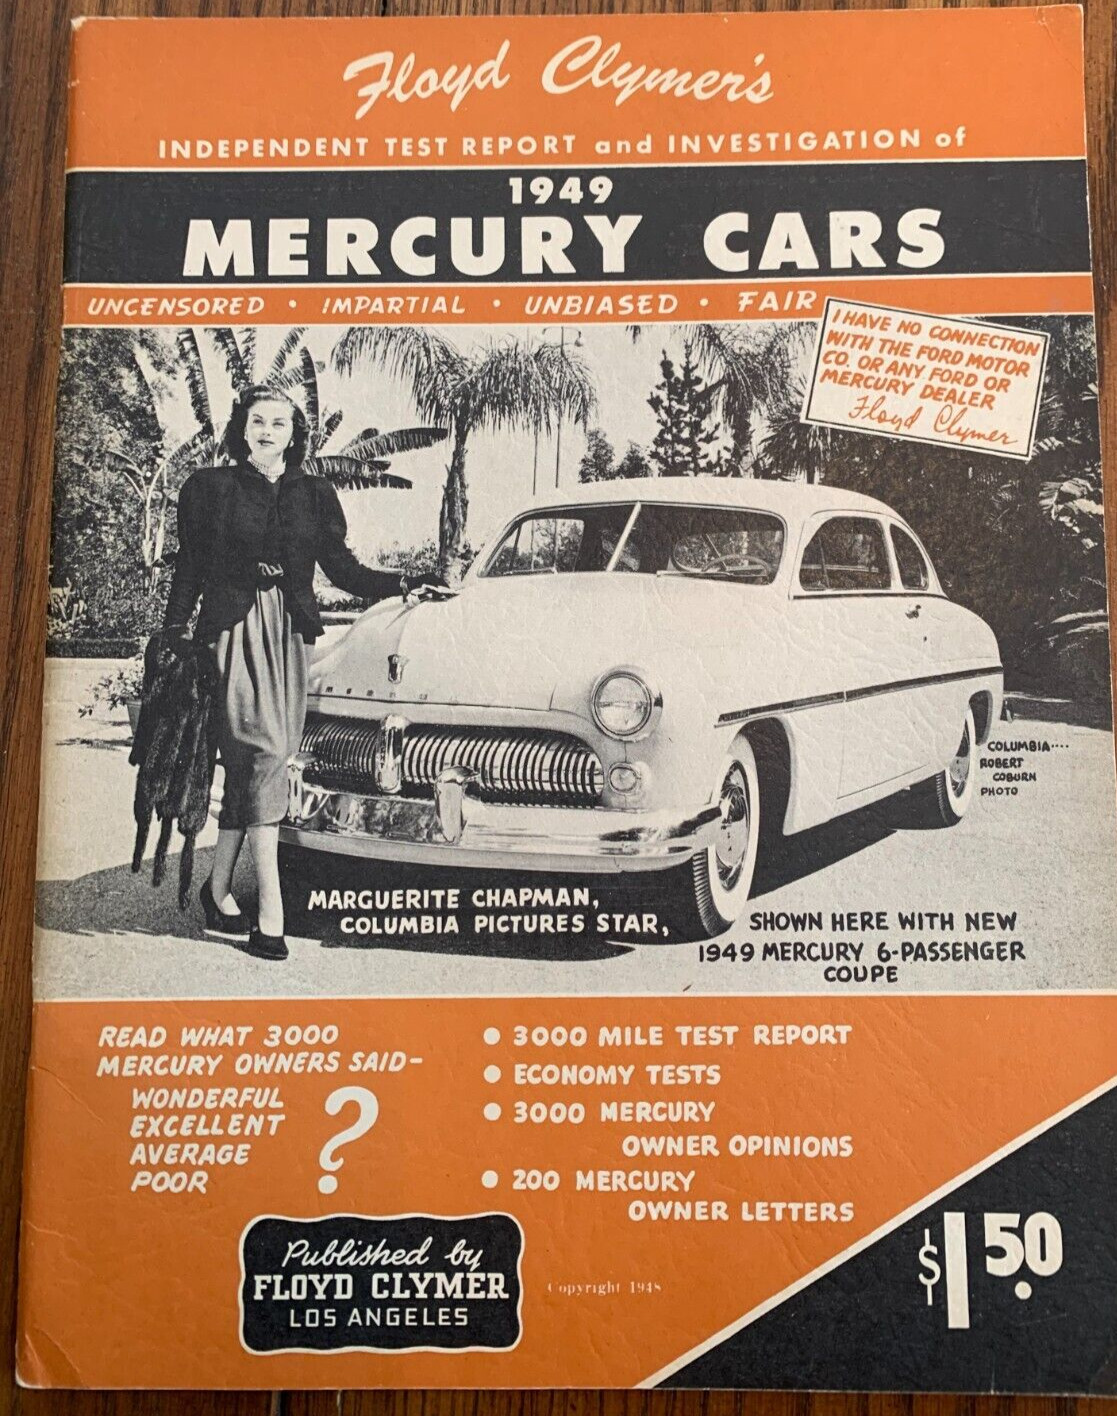 Floyd Clymer's Independent Test Report 1949 Mercury Cars